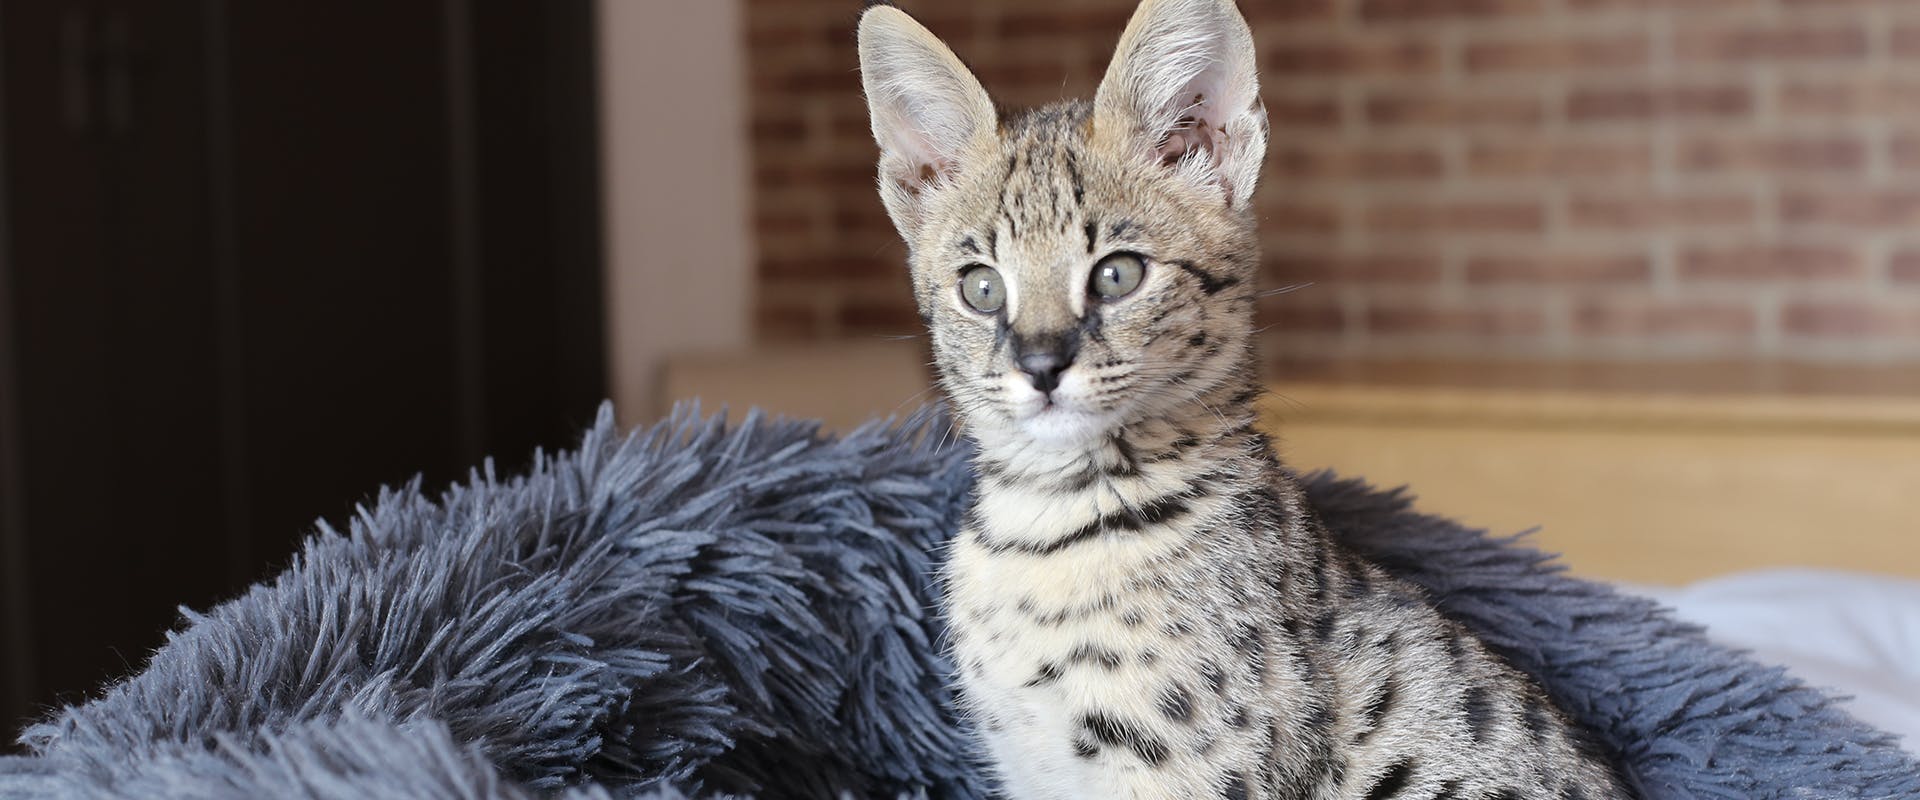 A Savannah kitten, a large exotic cat breed